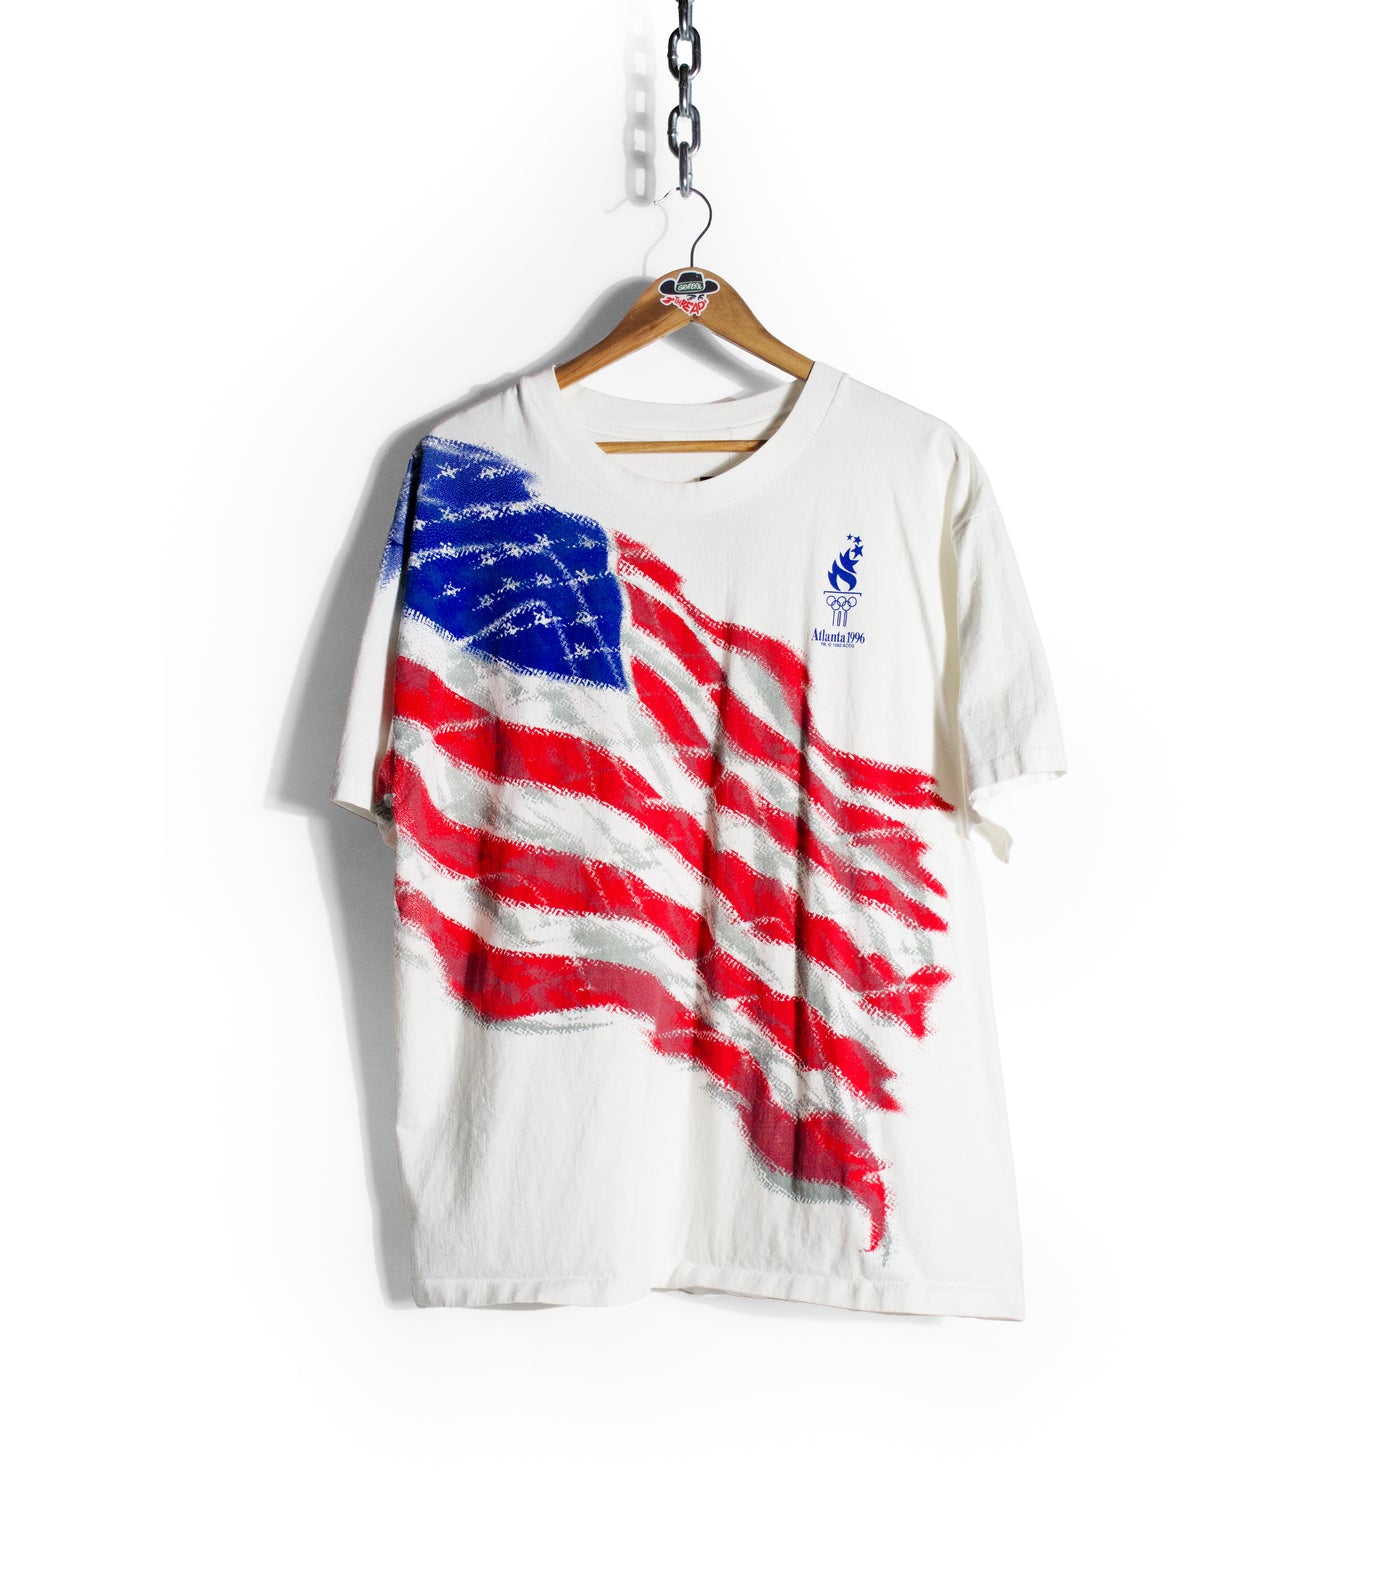 Vintage 1996 Atlanta Olympics T-Shirt